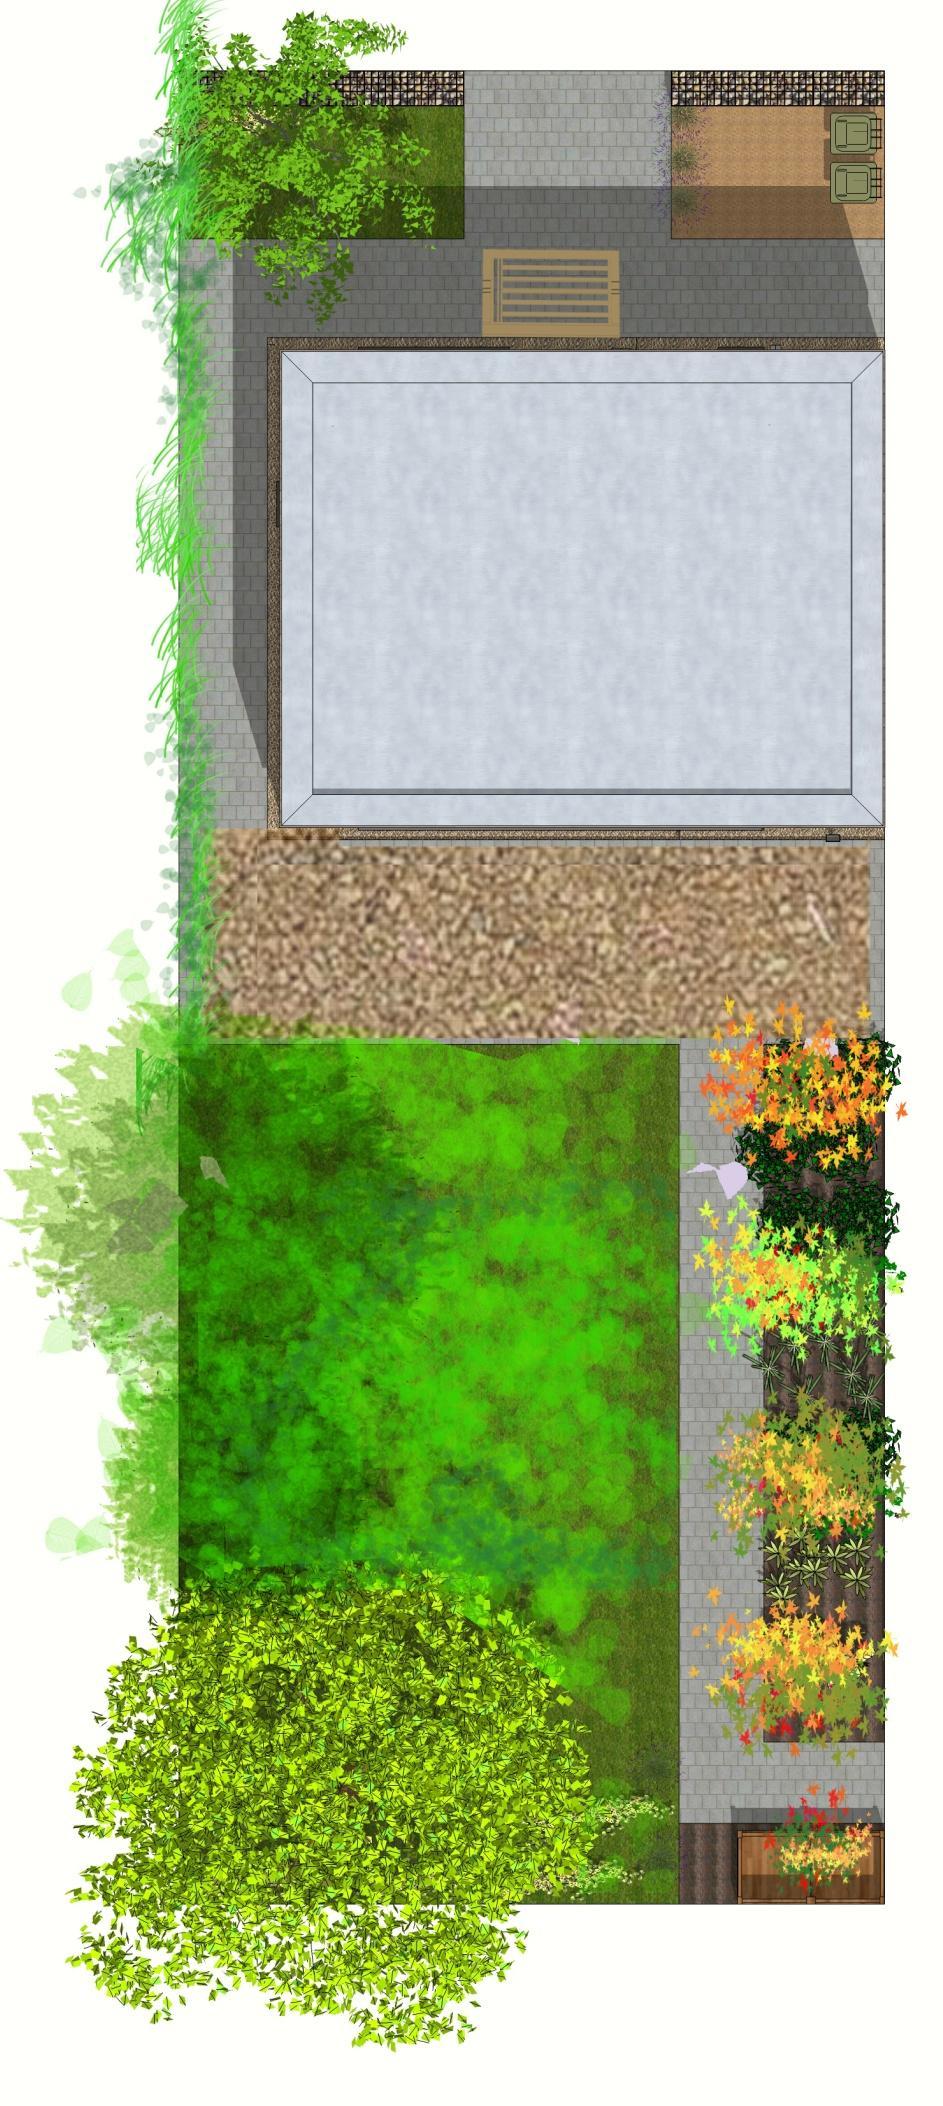 SELFBUILD ON A SHOESTRING SIMPLEHAUS Garden Elevation N The Simplehaus design